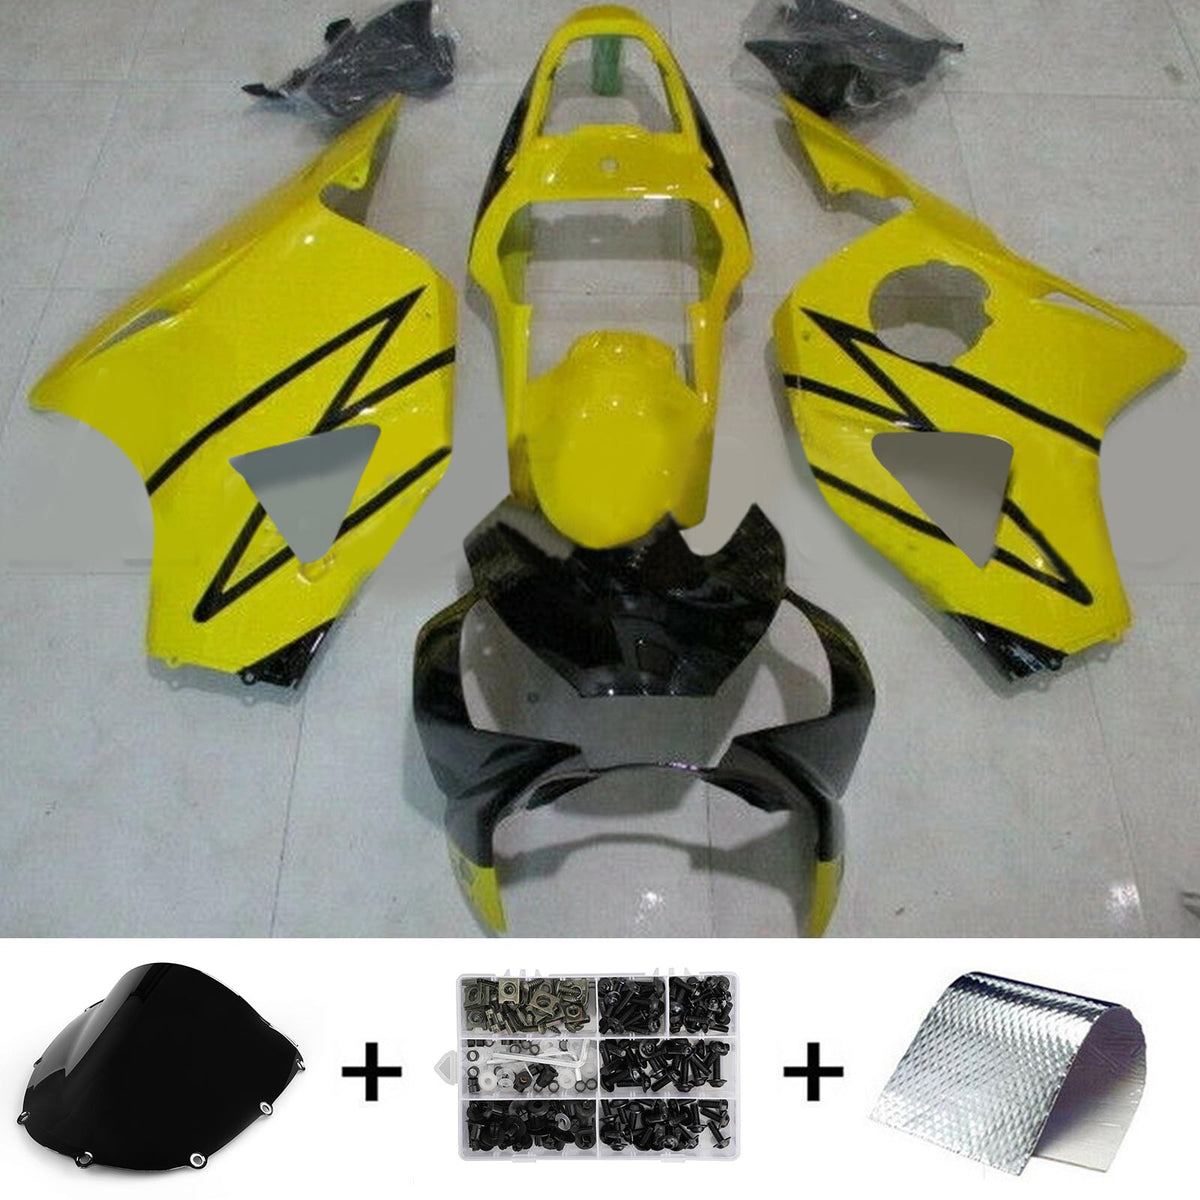 Kit carena Amotopart Honda CBR954 2002-2003 giallo e nero